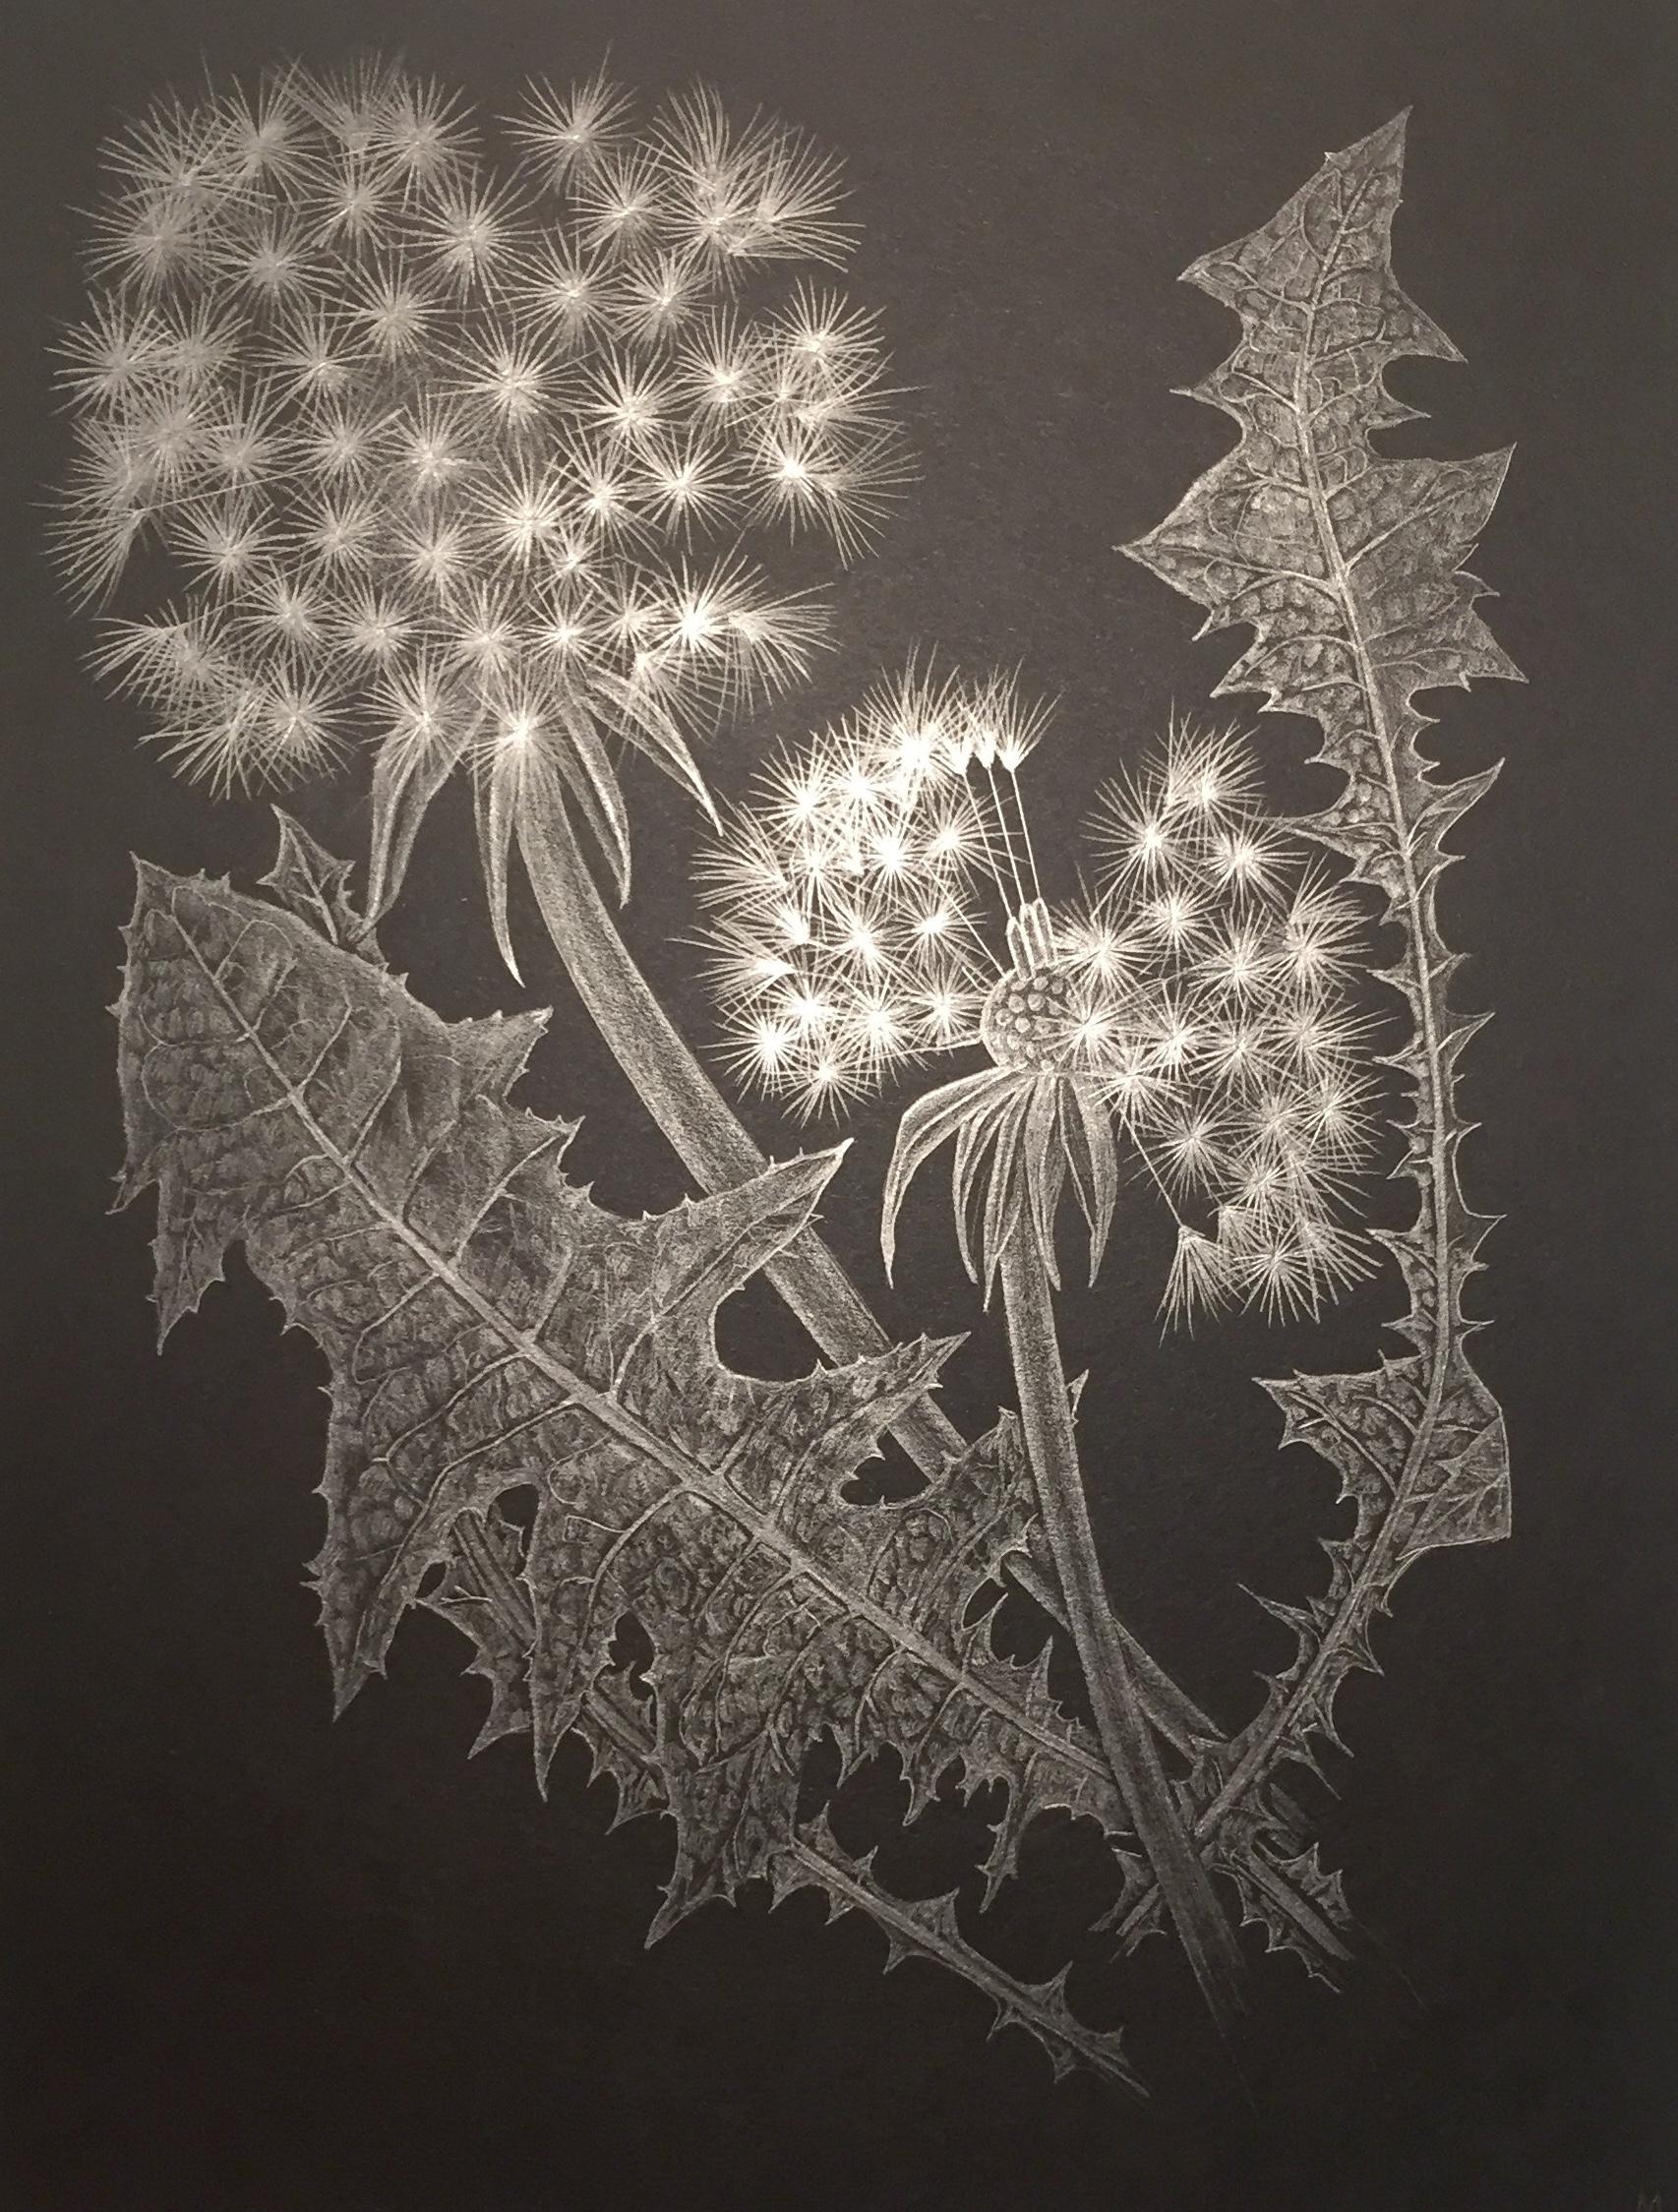 Margot Glass Landscape Art - Two Dandelions C, Silver Botanical Drawing On Black Paper